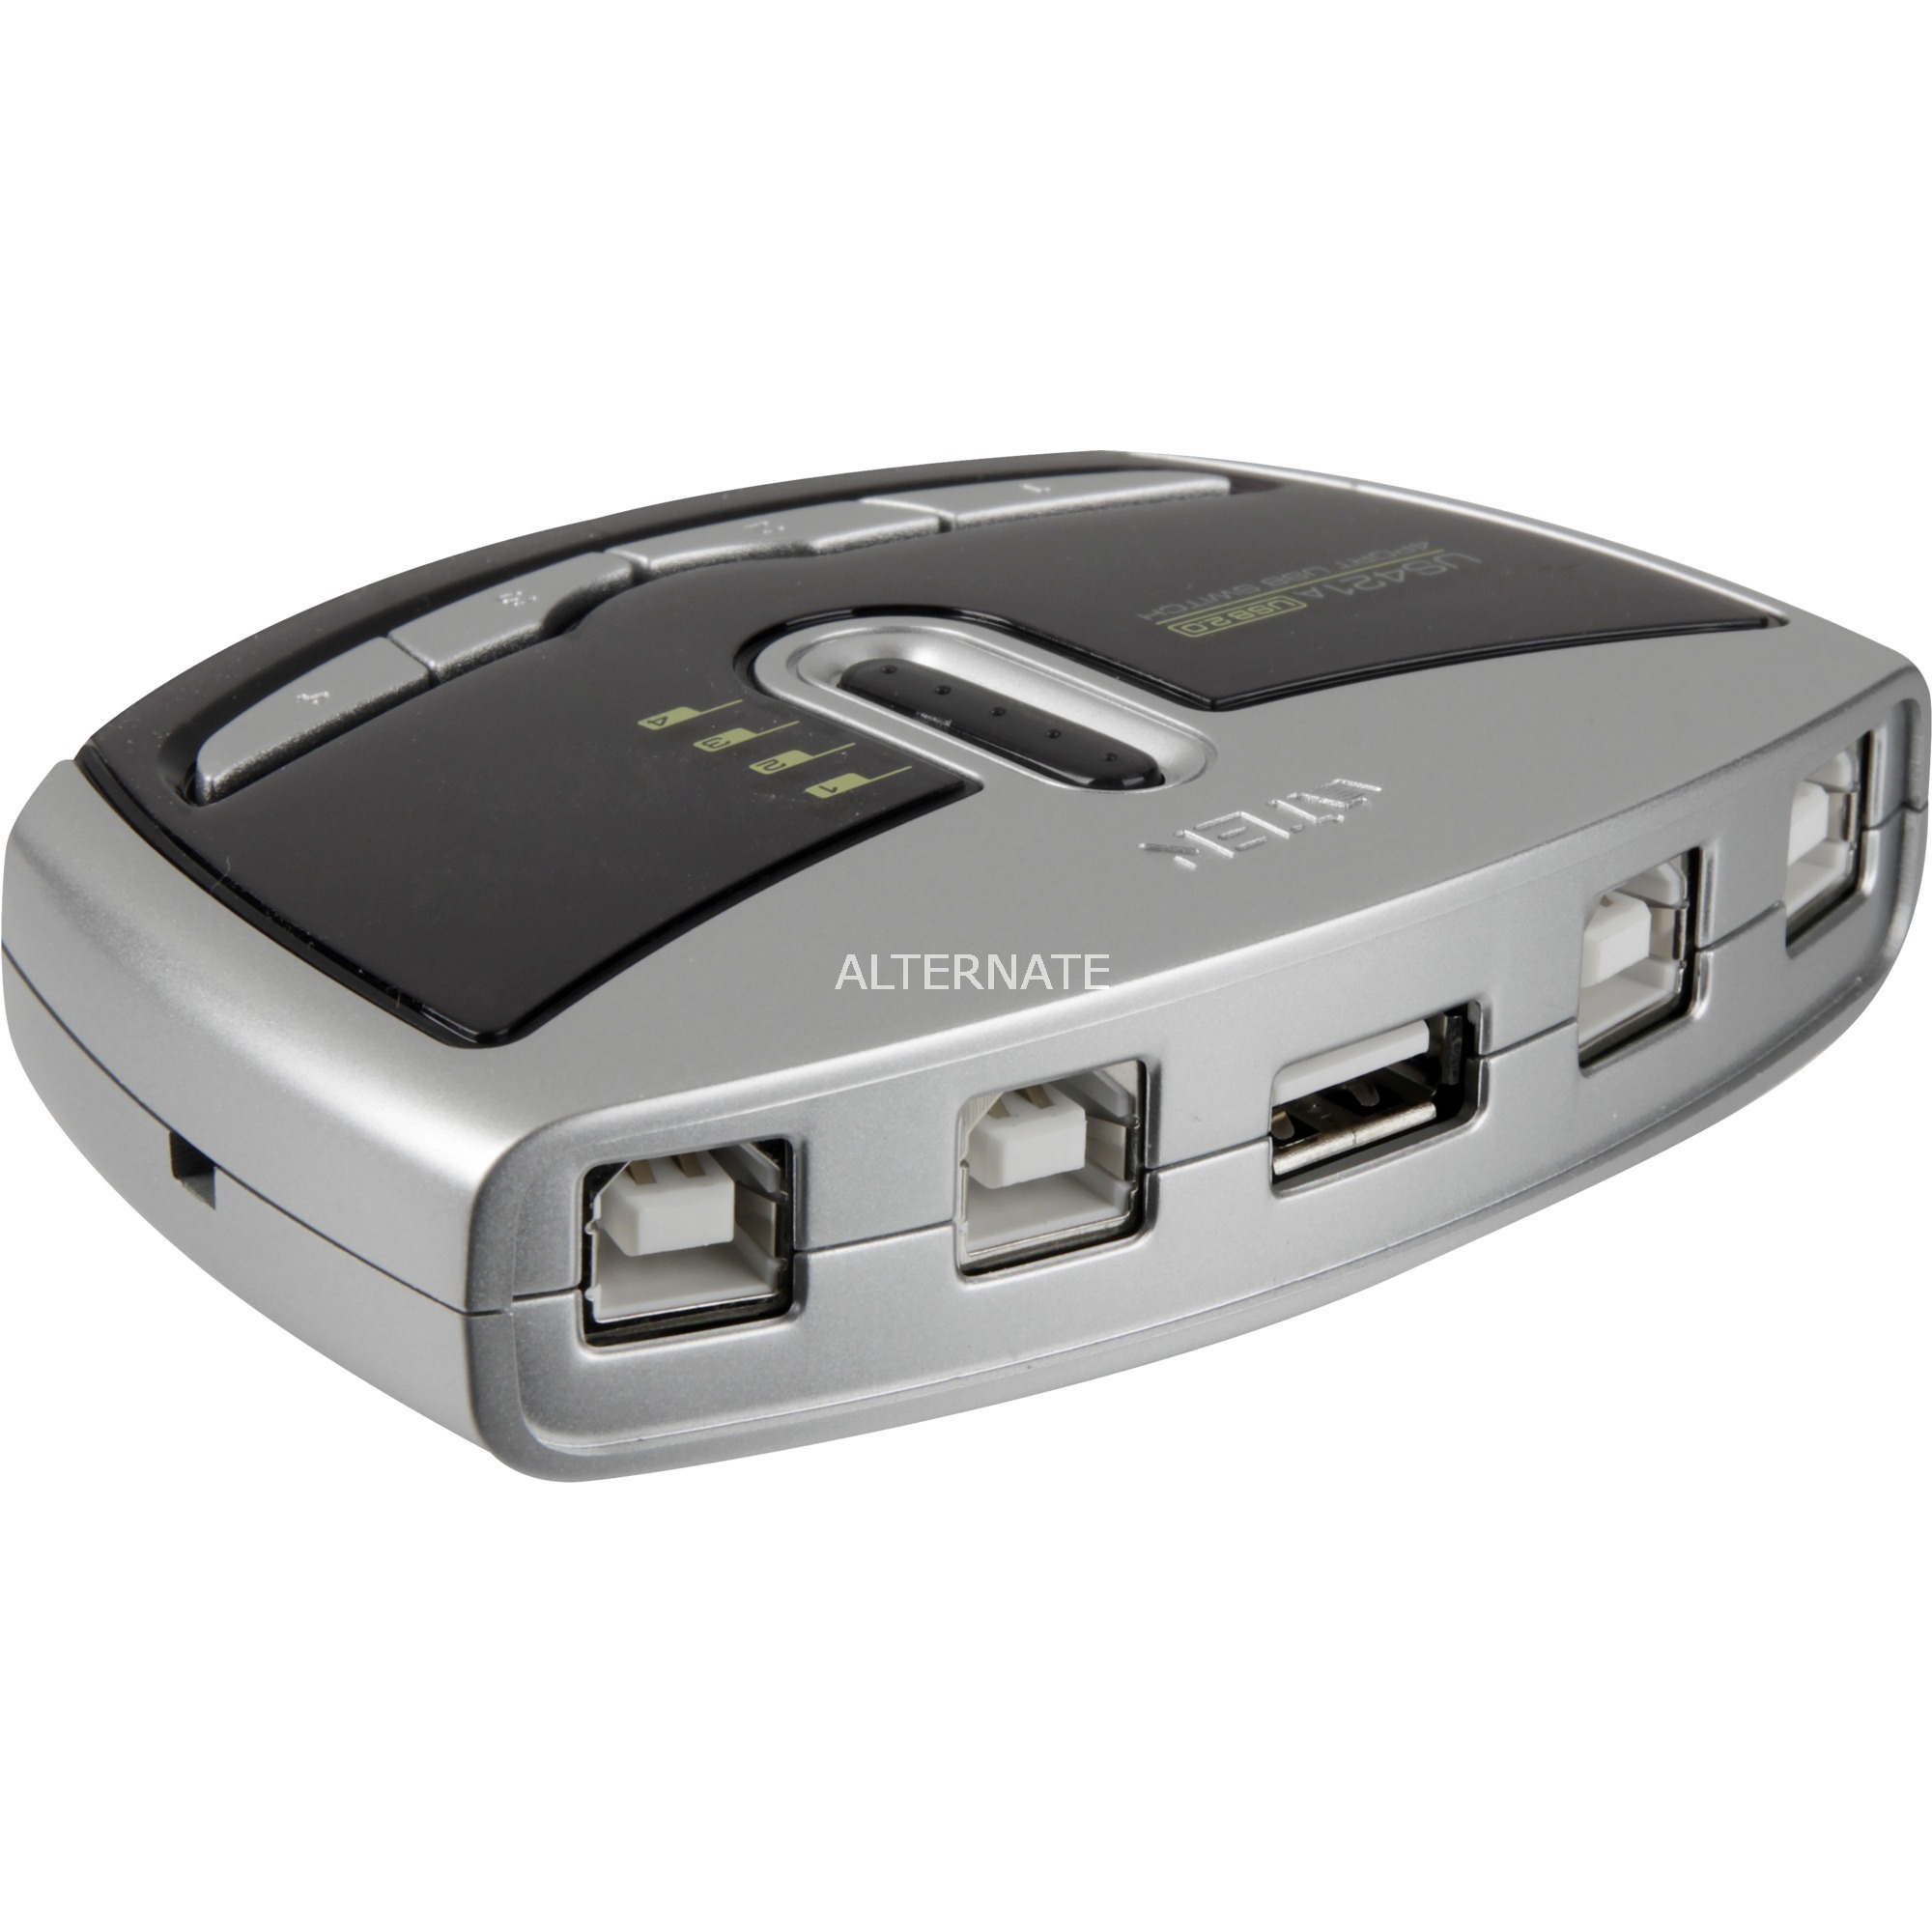 Image of Alternate - USB Peripheral Switch US-421, USB-Hub online einkaufen bei Alternate